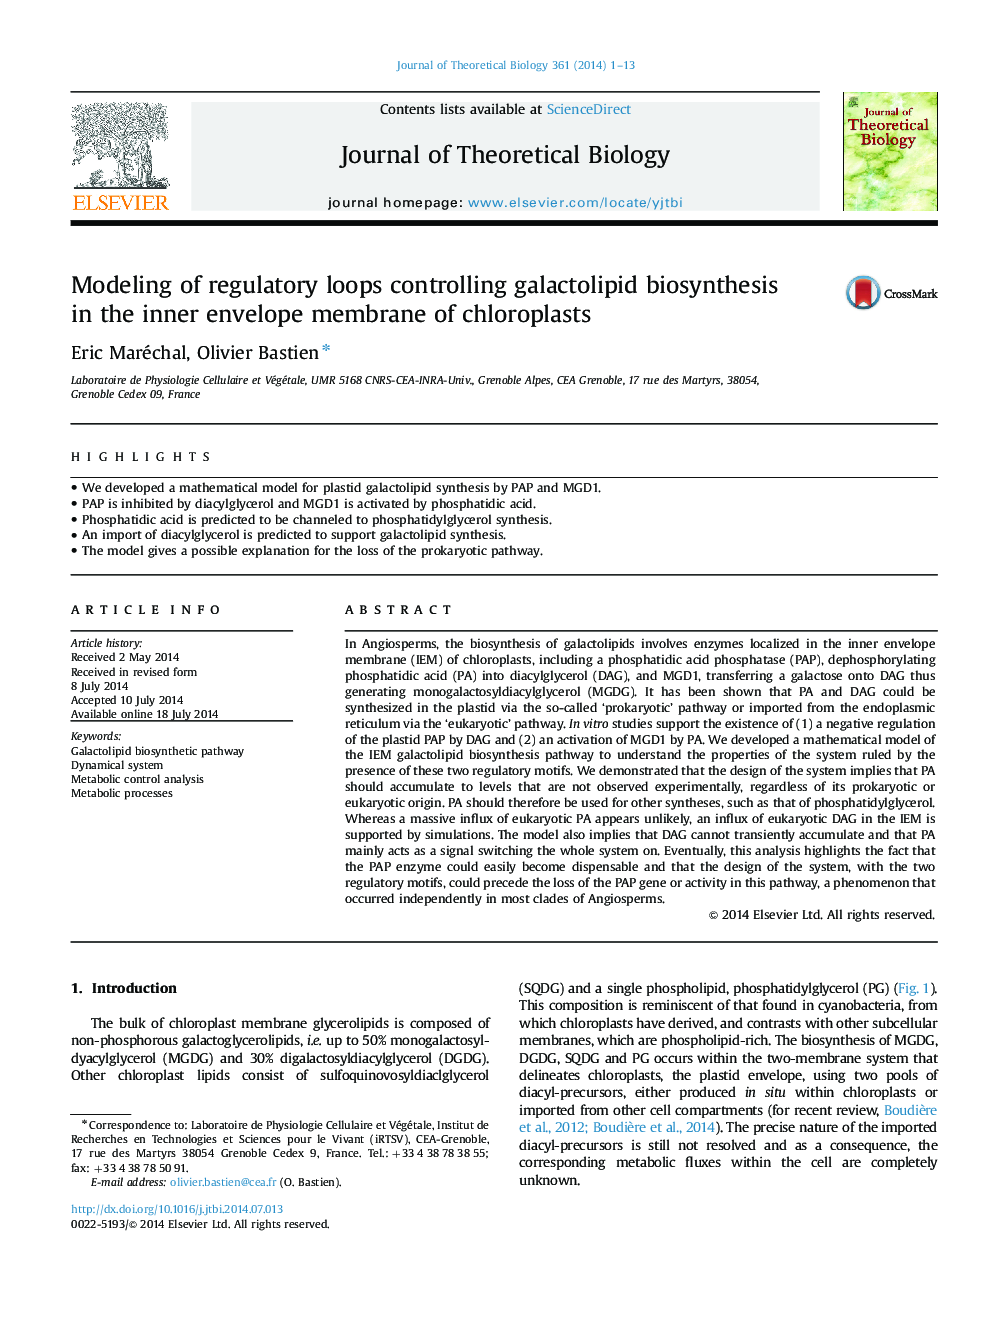 Modeling of regulatory loops controlling galactolipid biosynthesis in the inner envelope membrane of chloroplasts